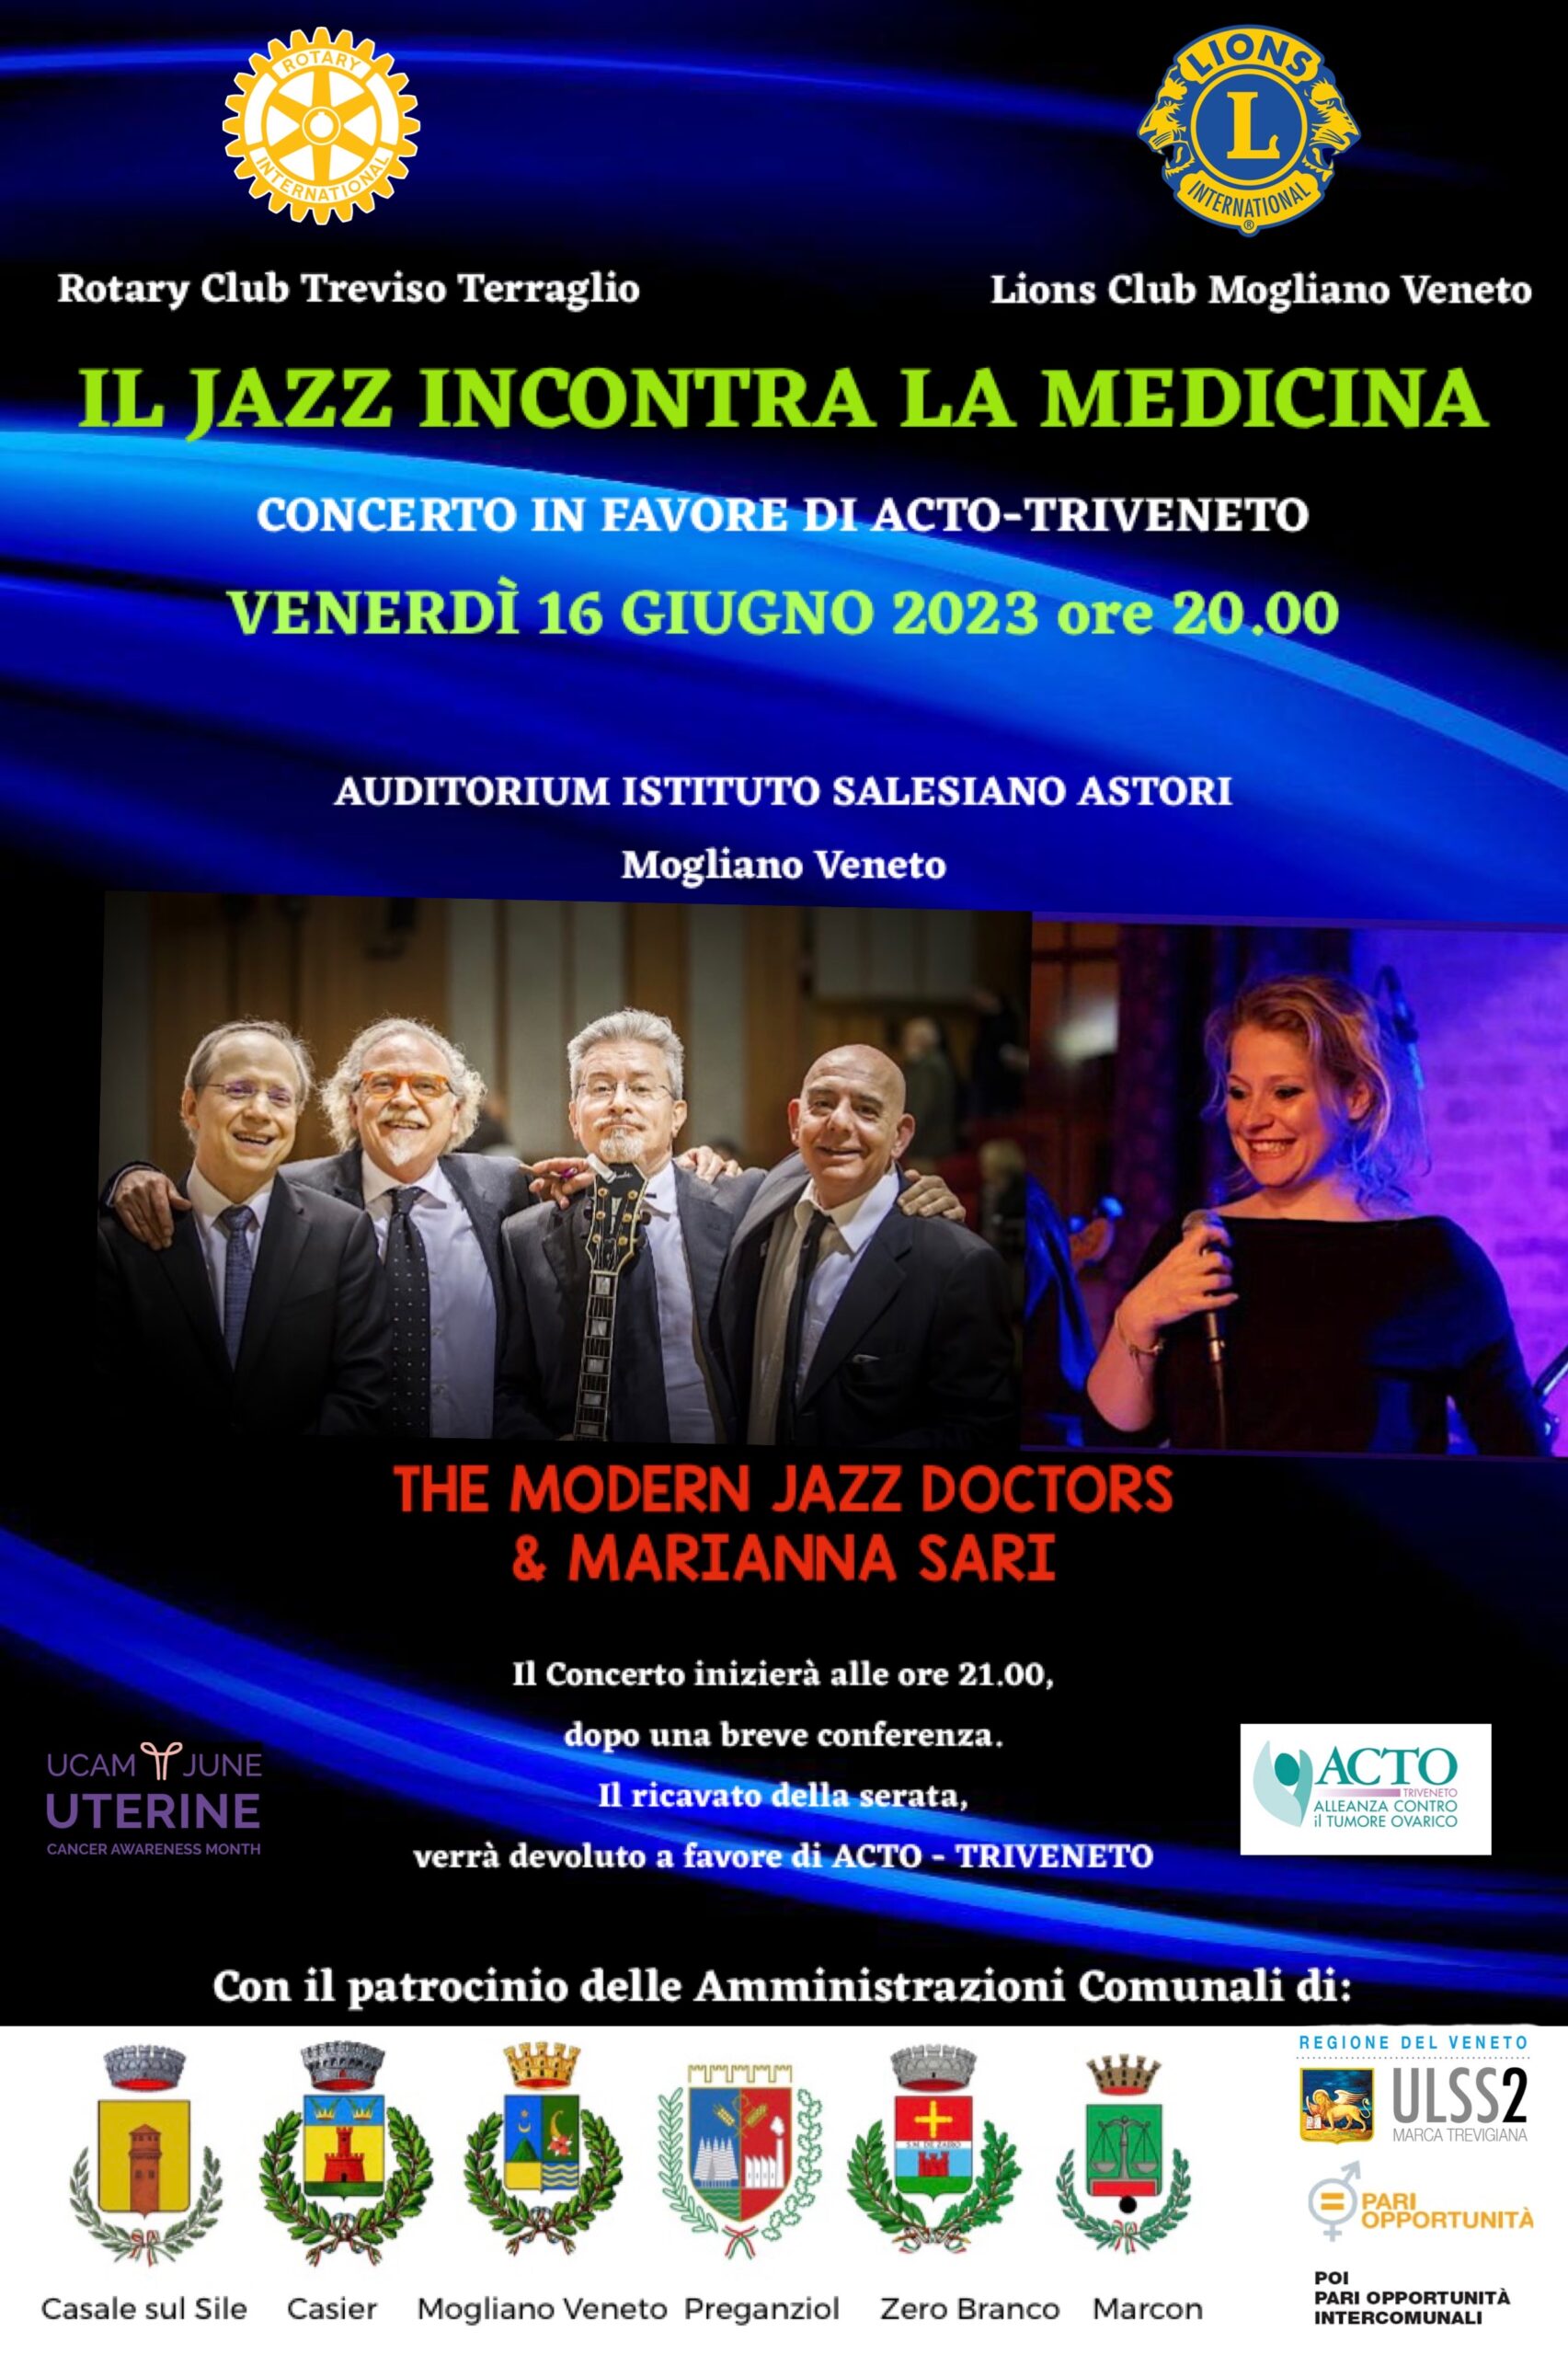 Concerto “Il Jazz incontra la medicina” Venerdì 16 giugno 2023